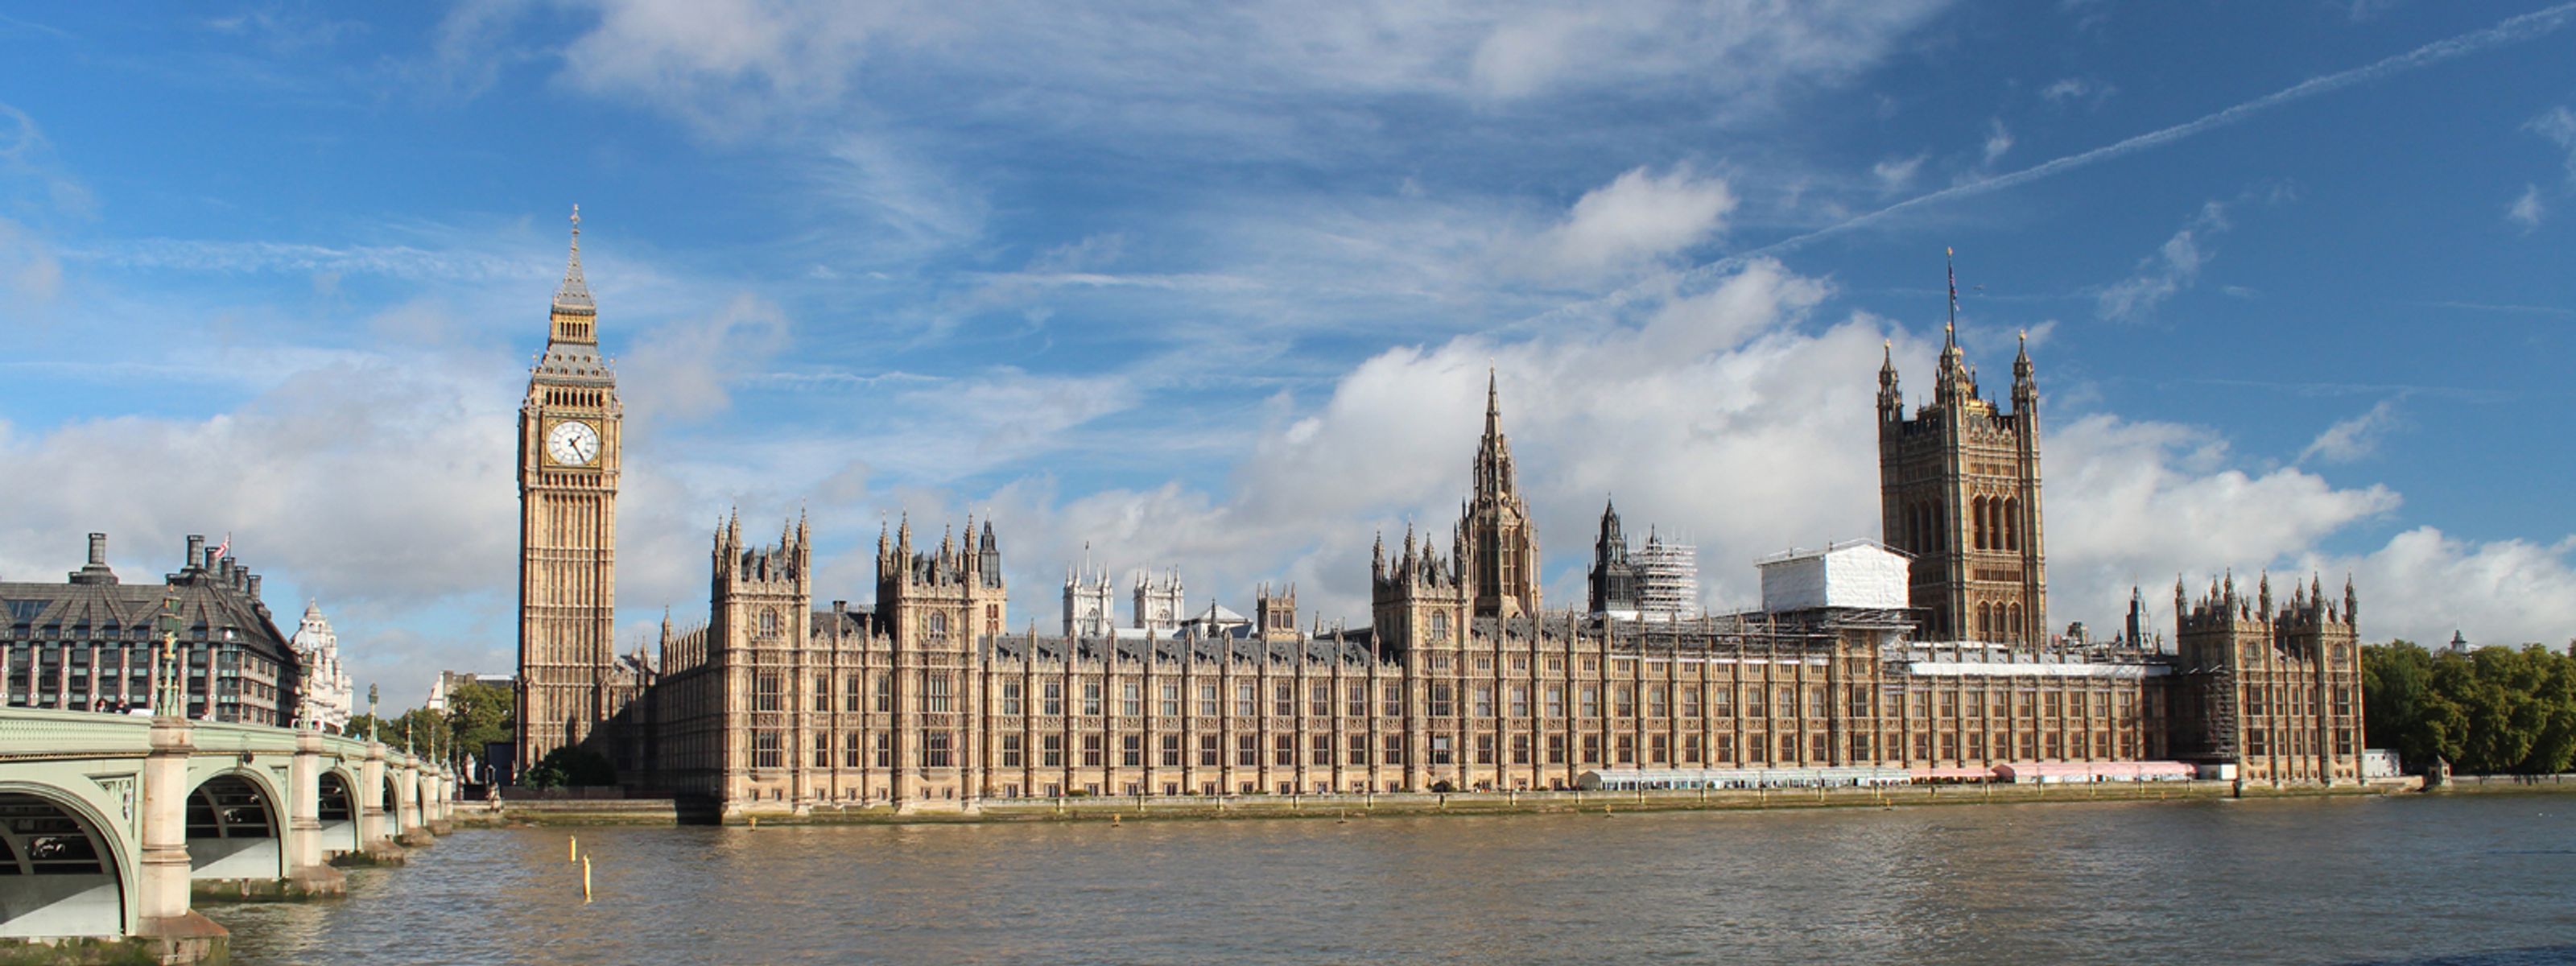 London Parlament mit Big Ben